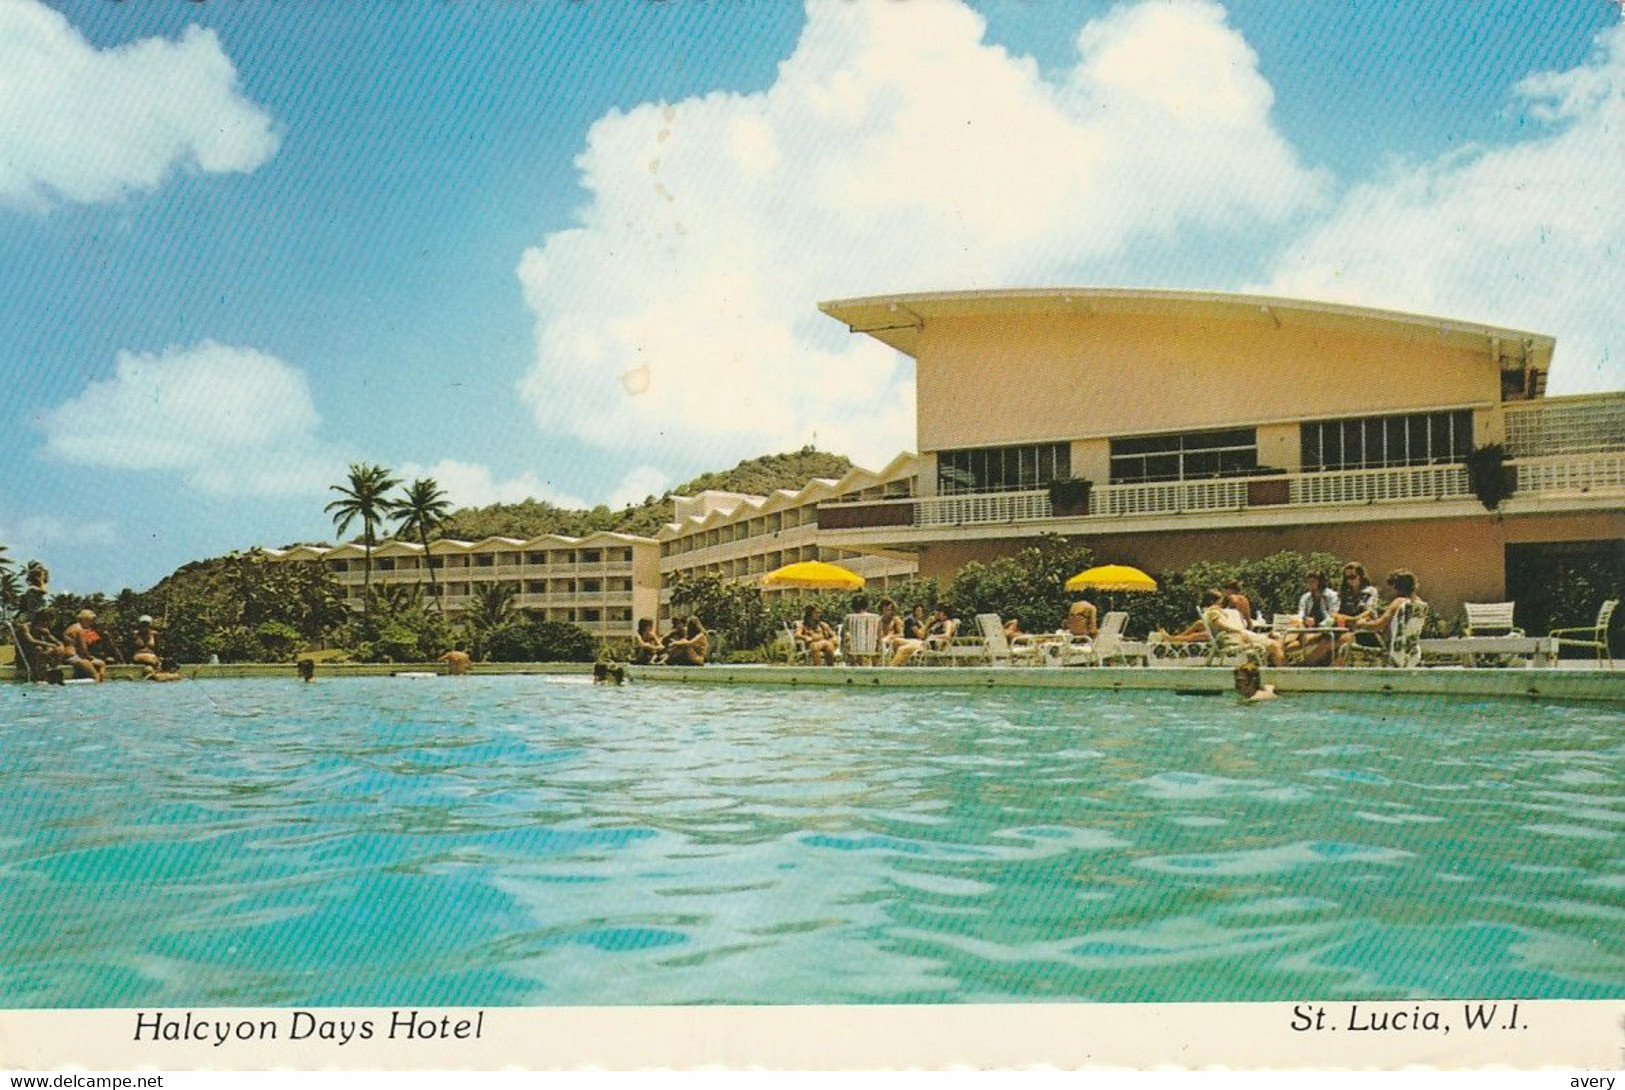 Halcyon Days Hotel, St. Lucia, West Indies - Santa Lucía